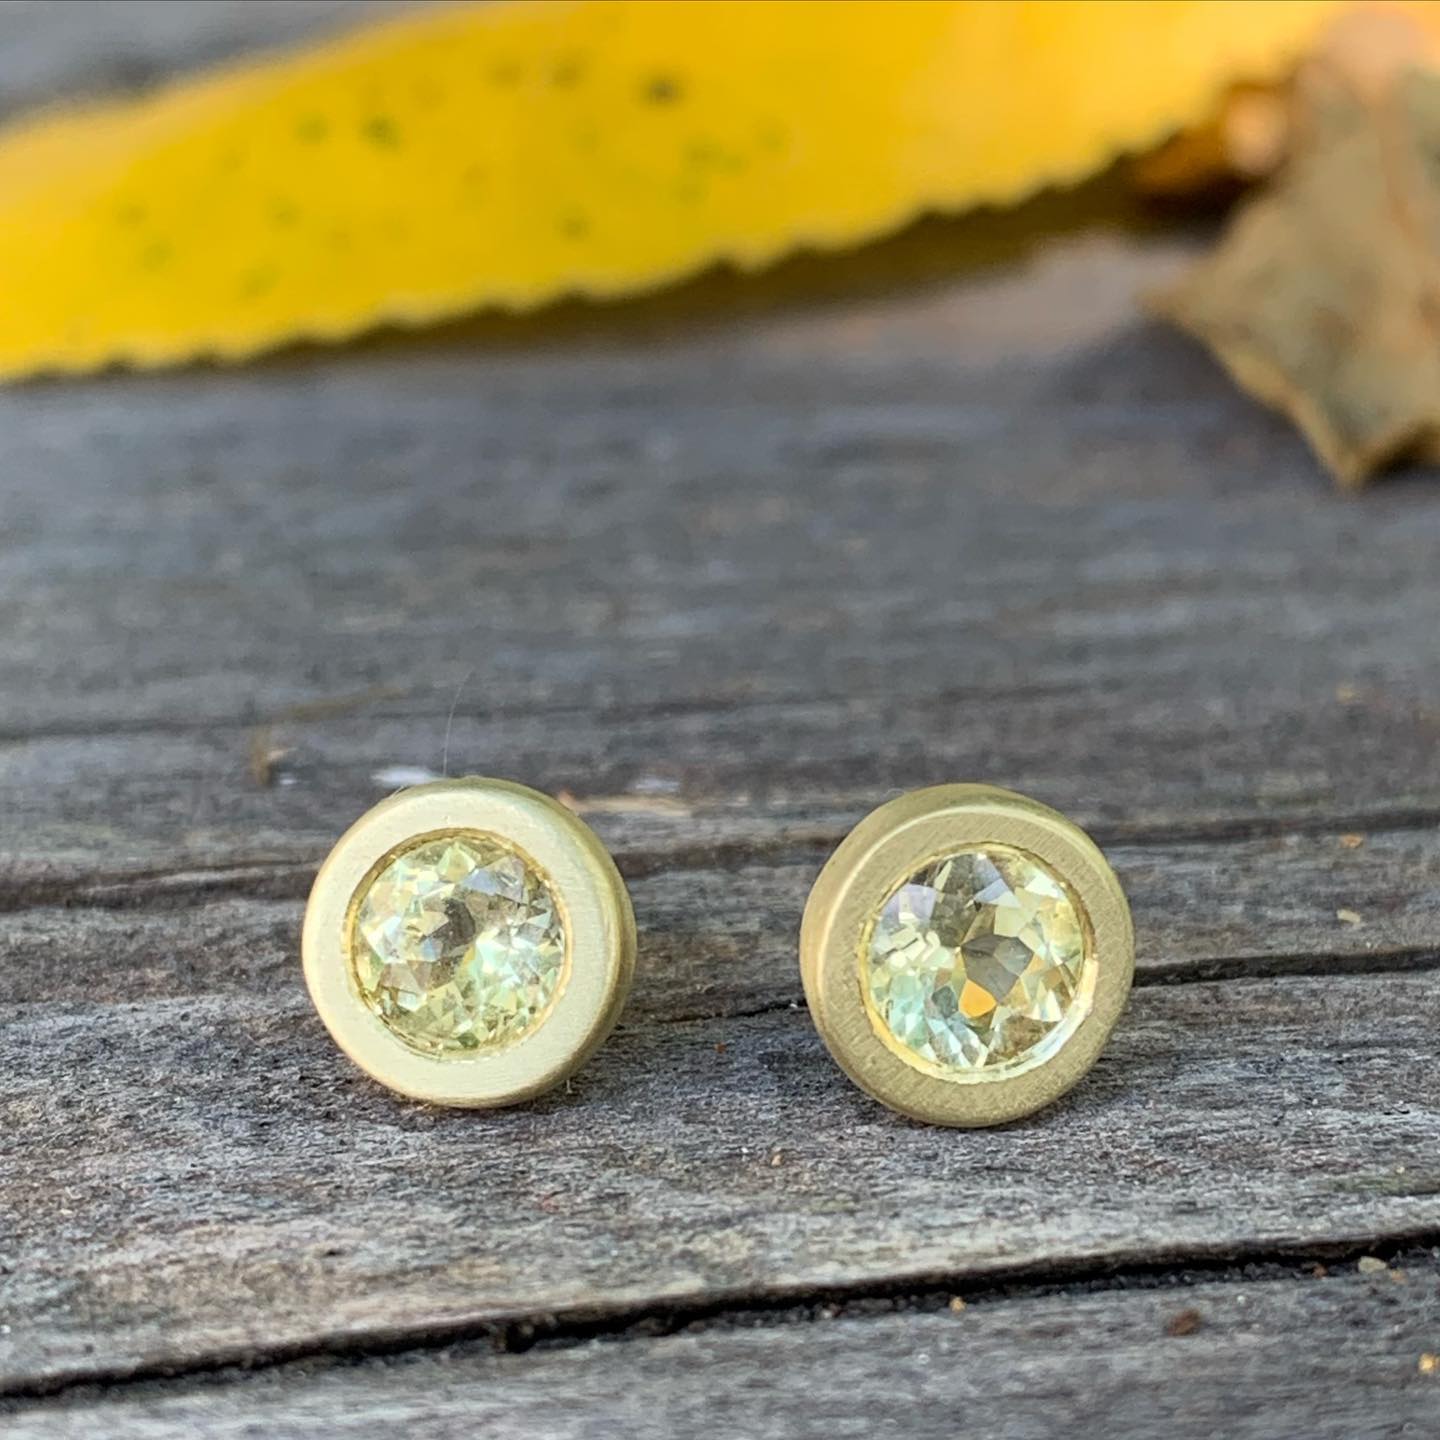 Gold and yellow diamond earrings